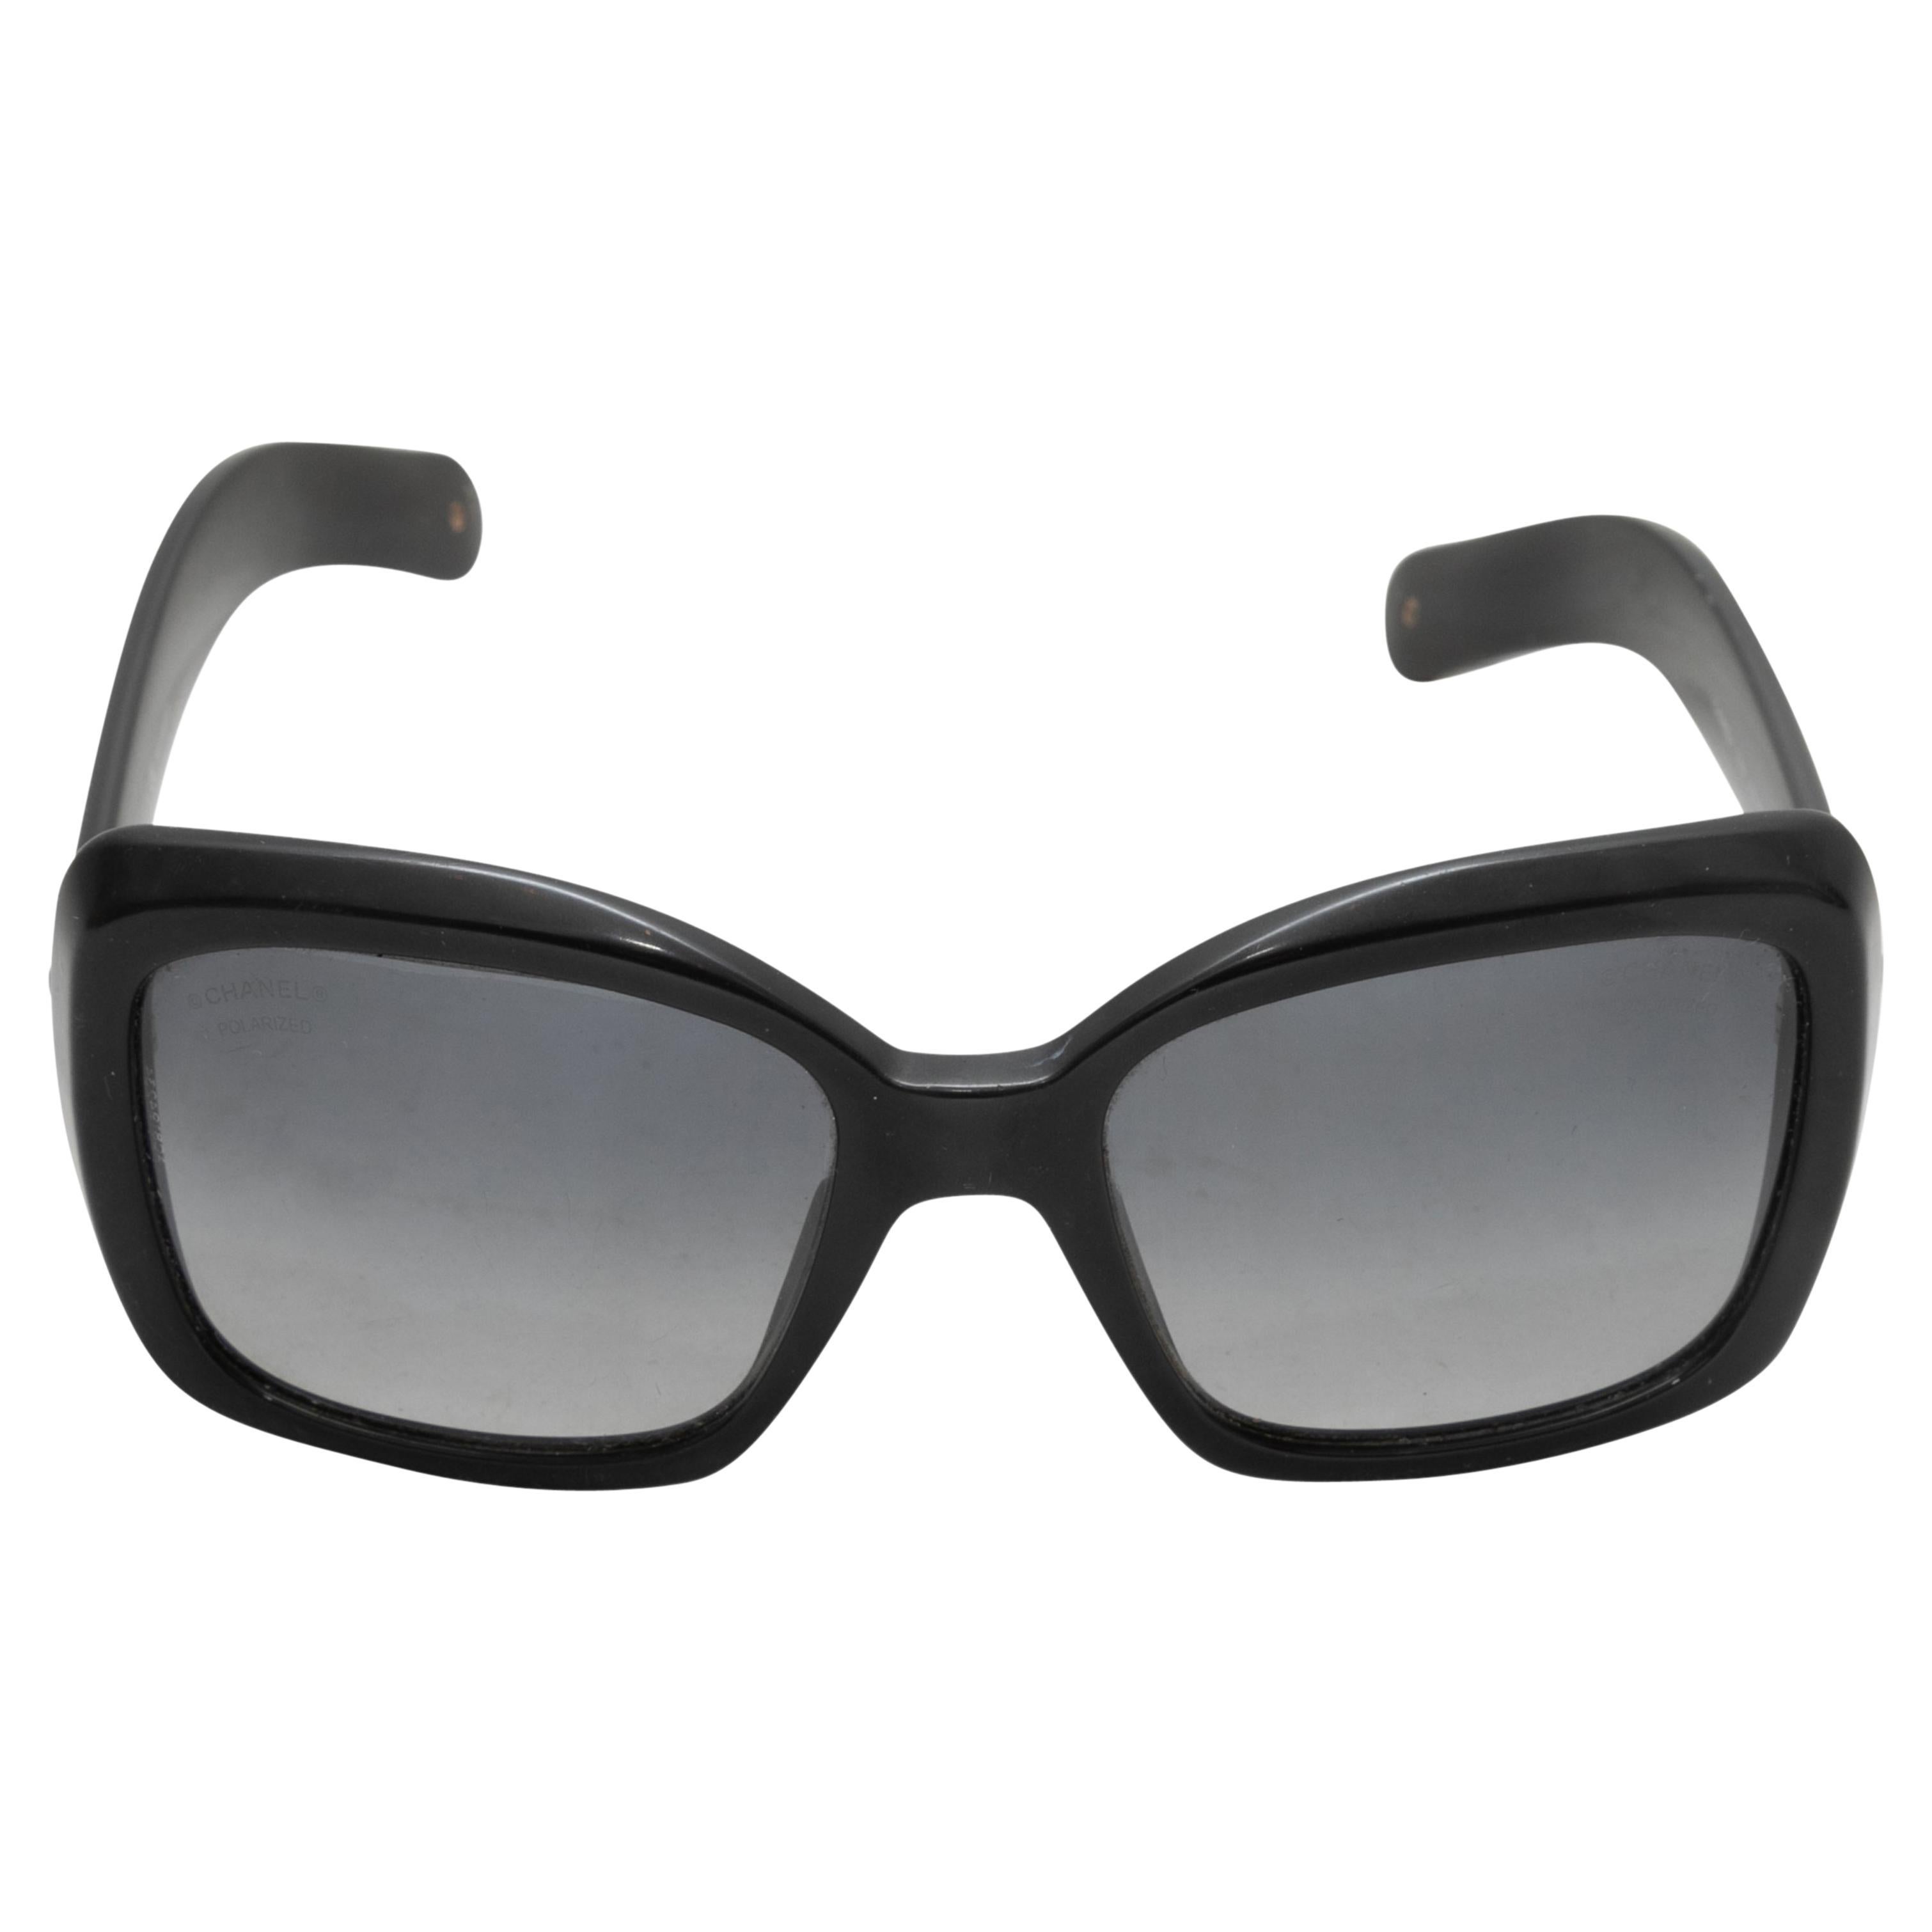 Black Chanel Oversized Sunglasses